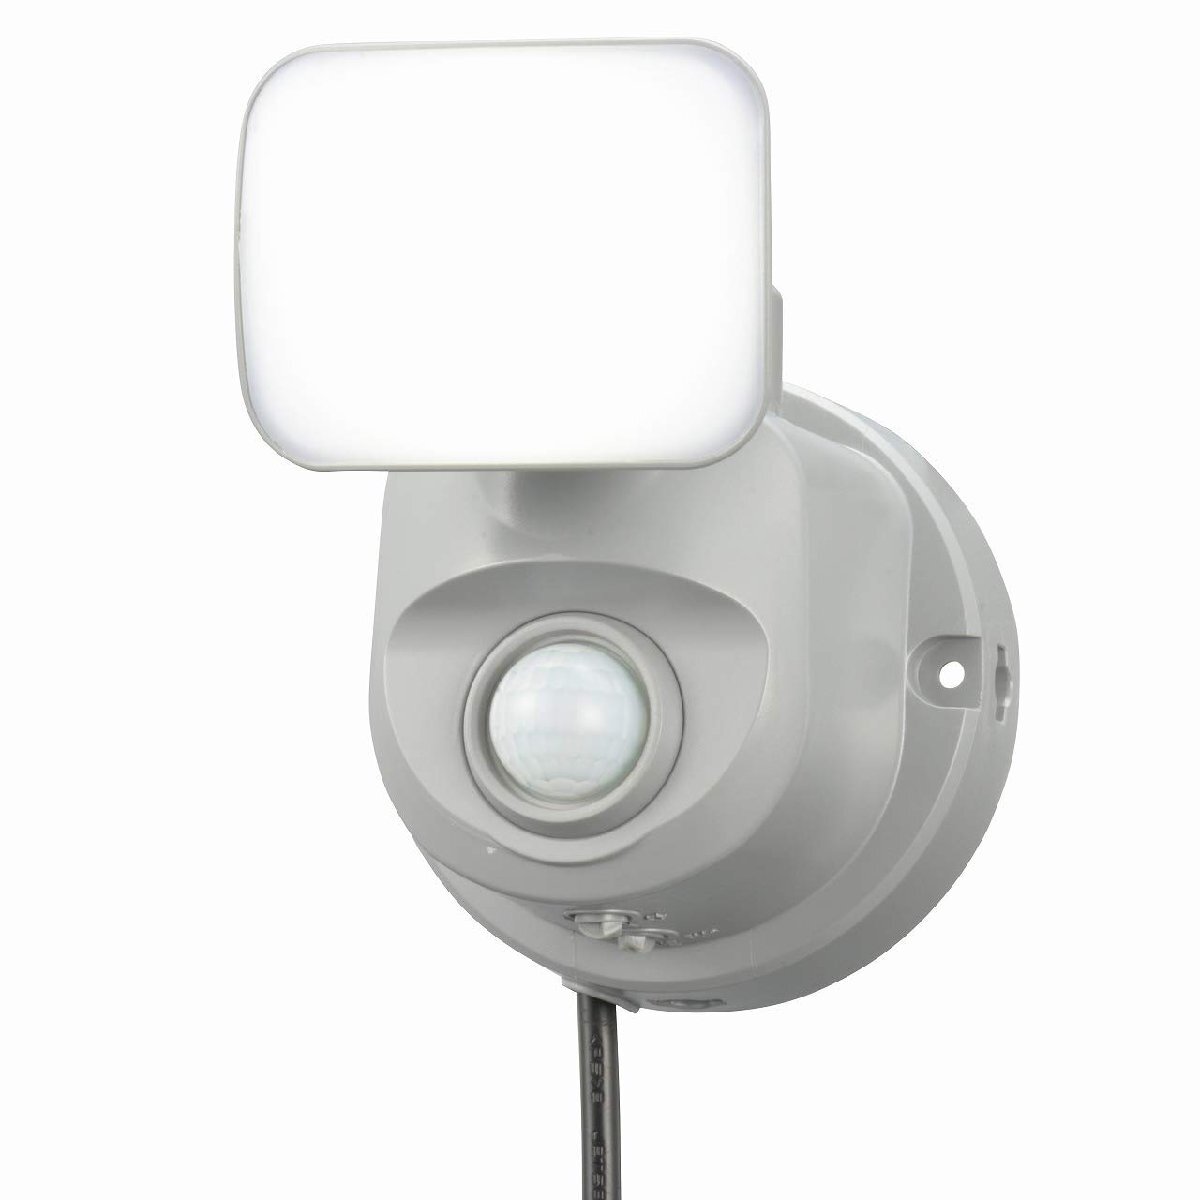  ом (OHM) электро- машина (Ohm Electric) сенсор свет OSE-LS400 система безопасности серый корпус : глубина 11.6cm корпус : высота 